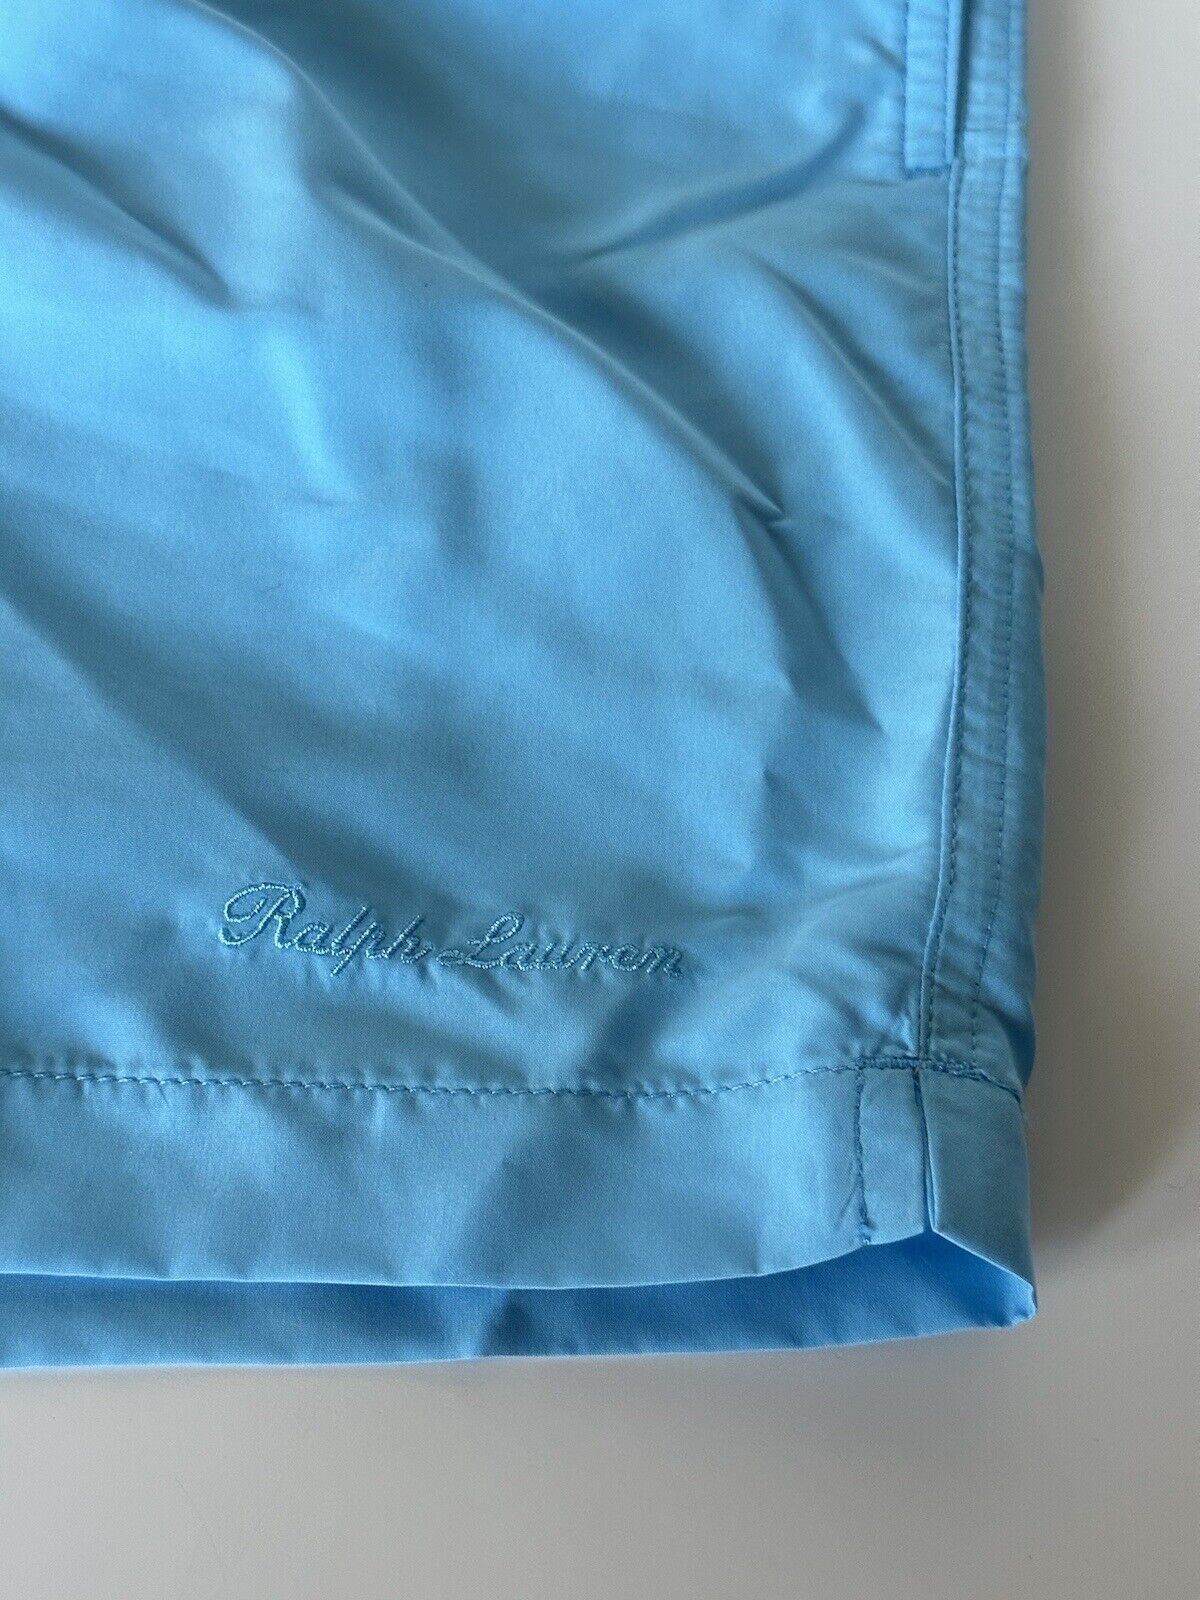 NWT $295 Polo Ralph Lauren Purple Label Mens Blue Swim Shorts Trunks XL Portugal